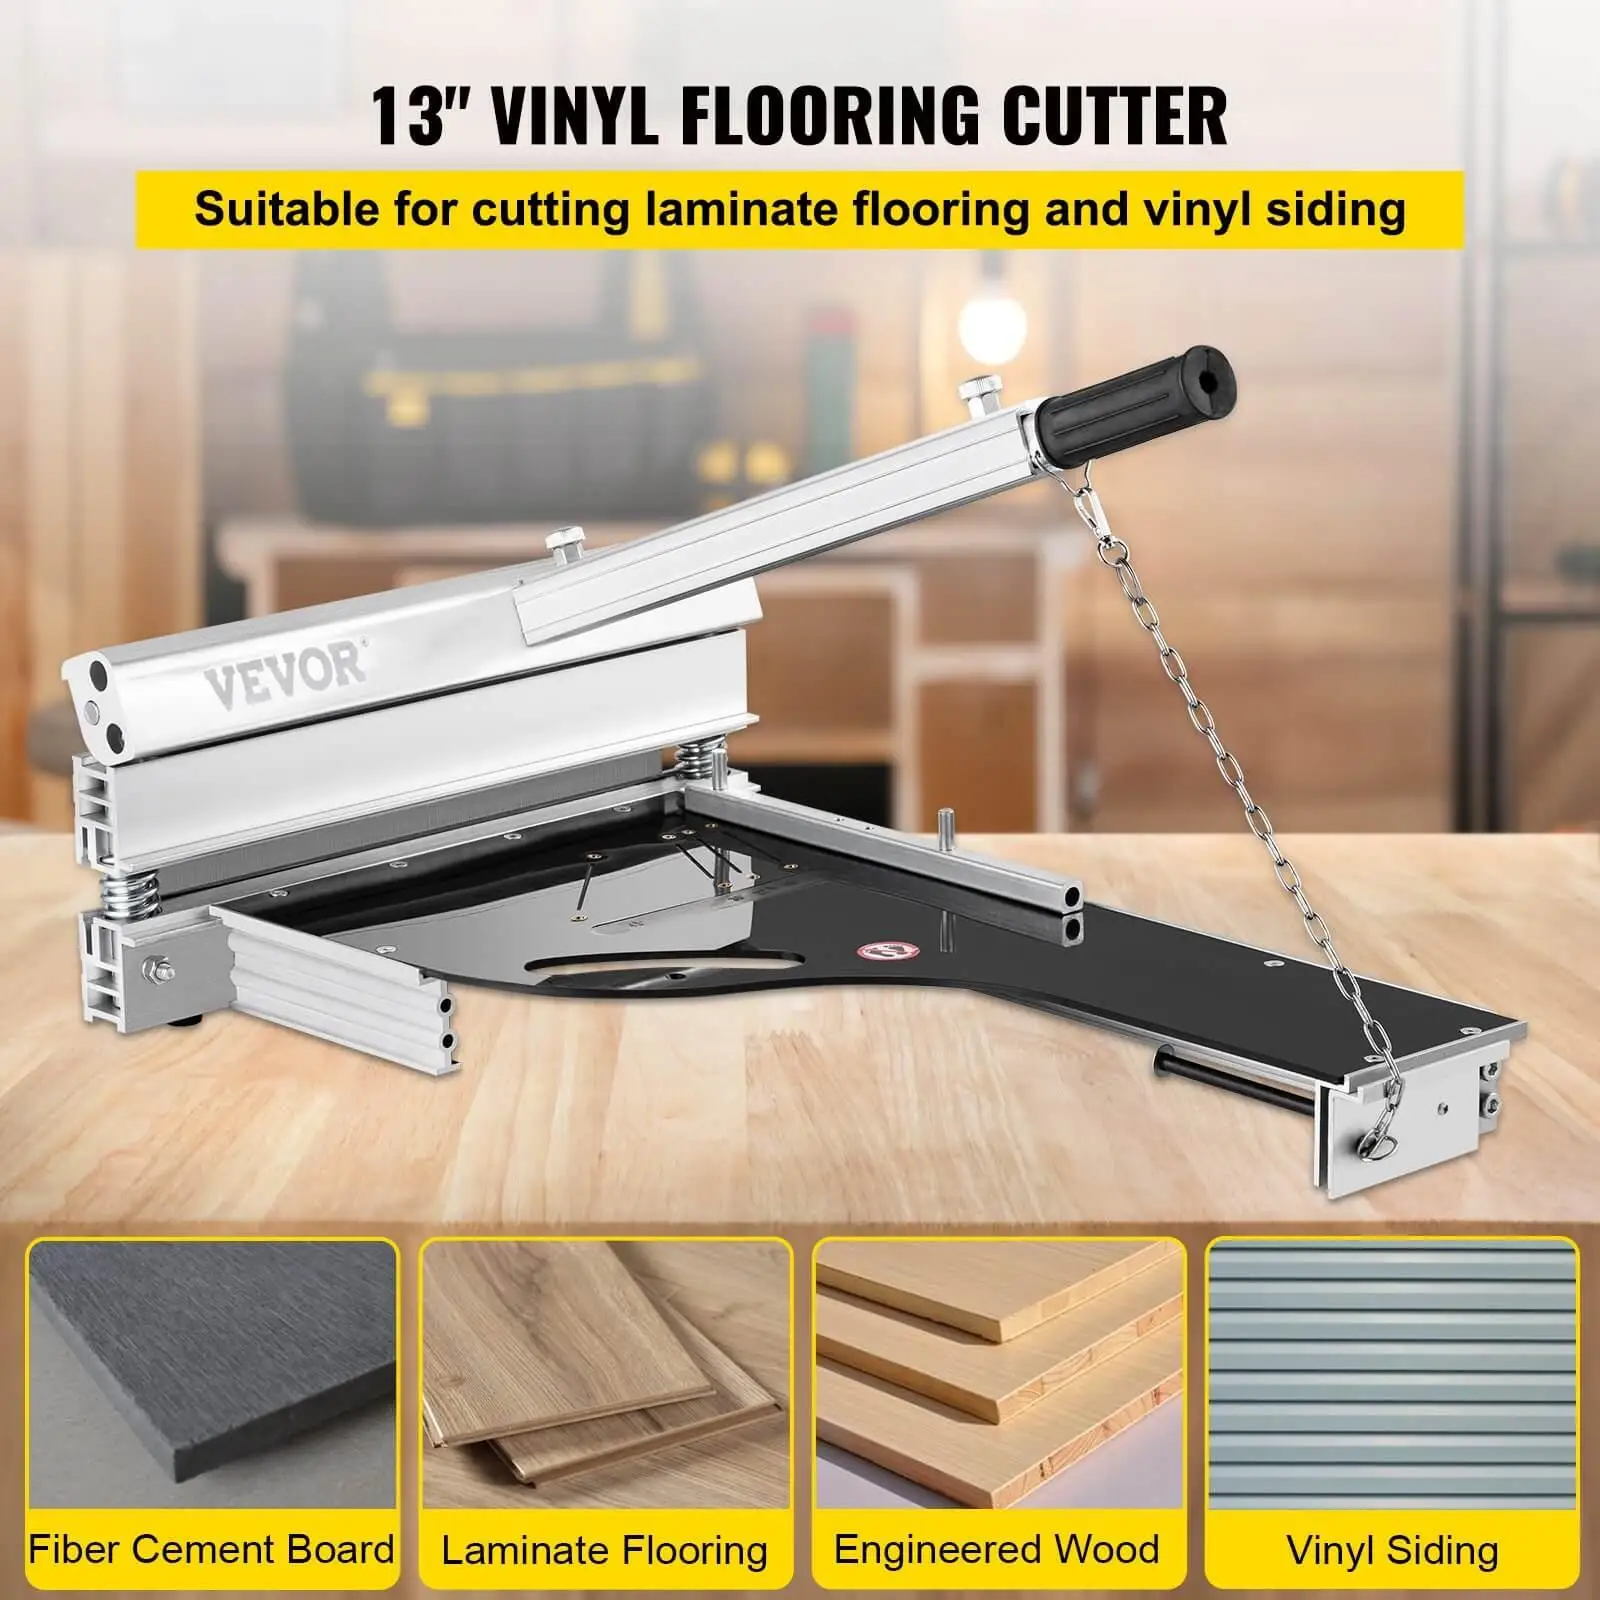 VEVOR Laminate floor cutter